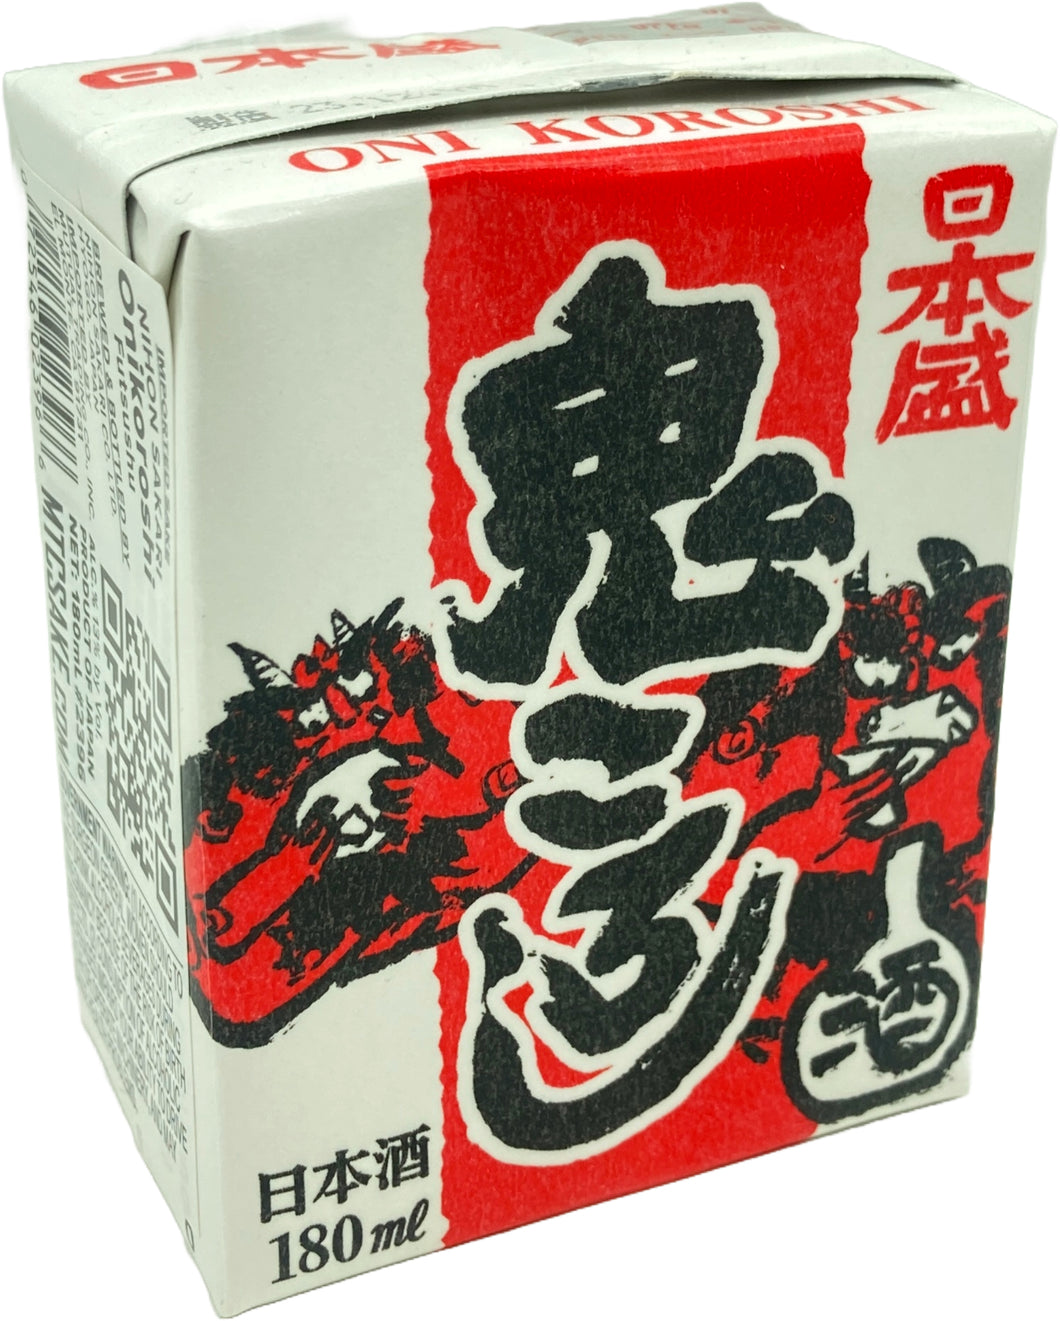 Oni Koroshi Futsushu Sake Box 180ml